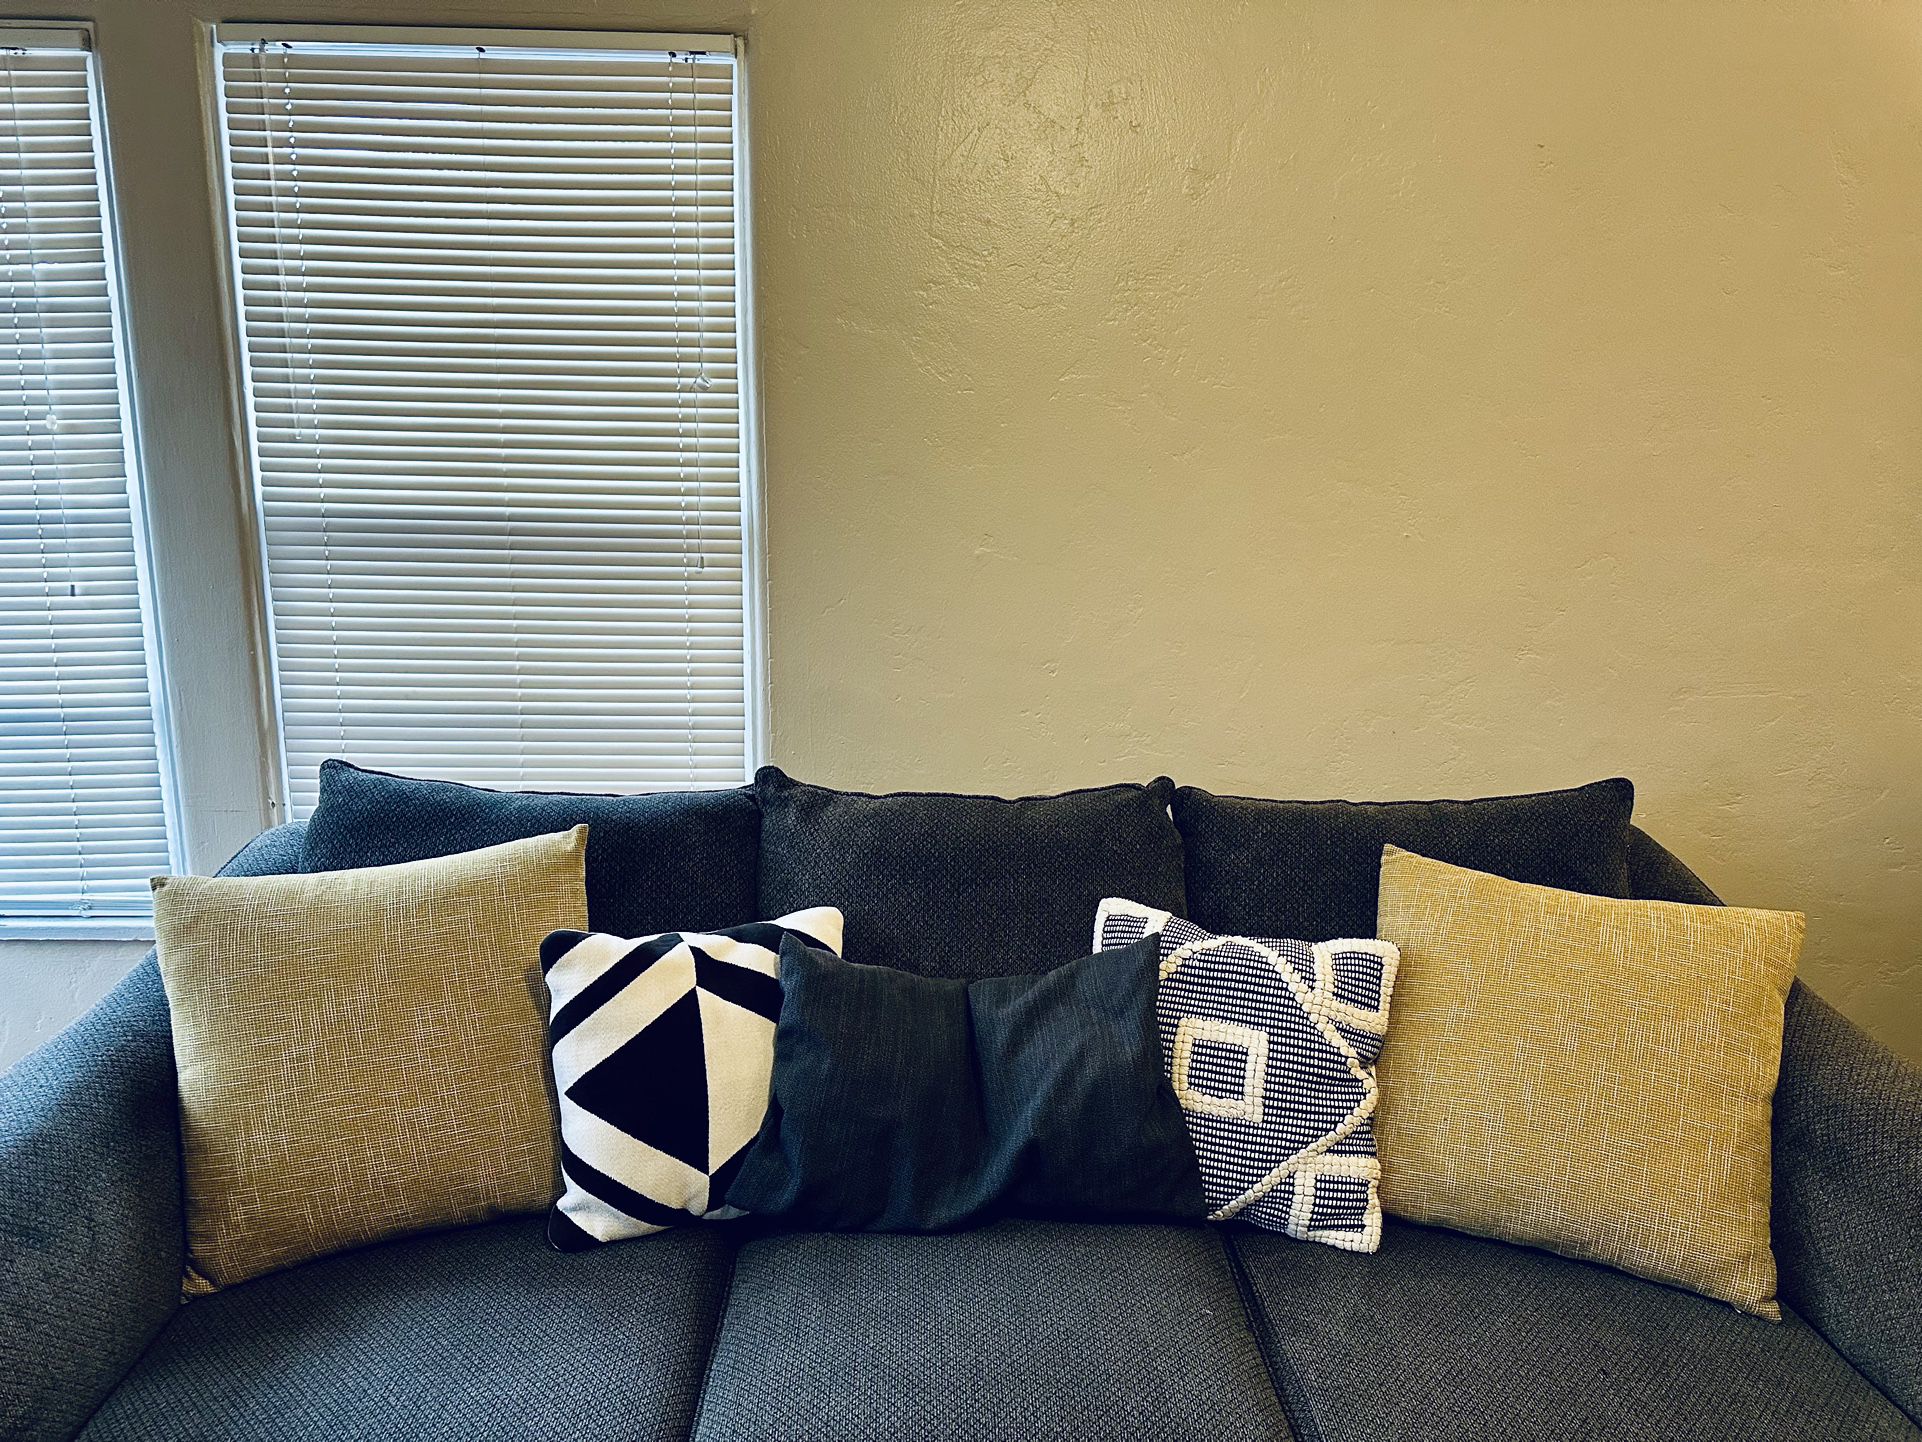 5 Sofa Throw Pillows Set